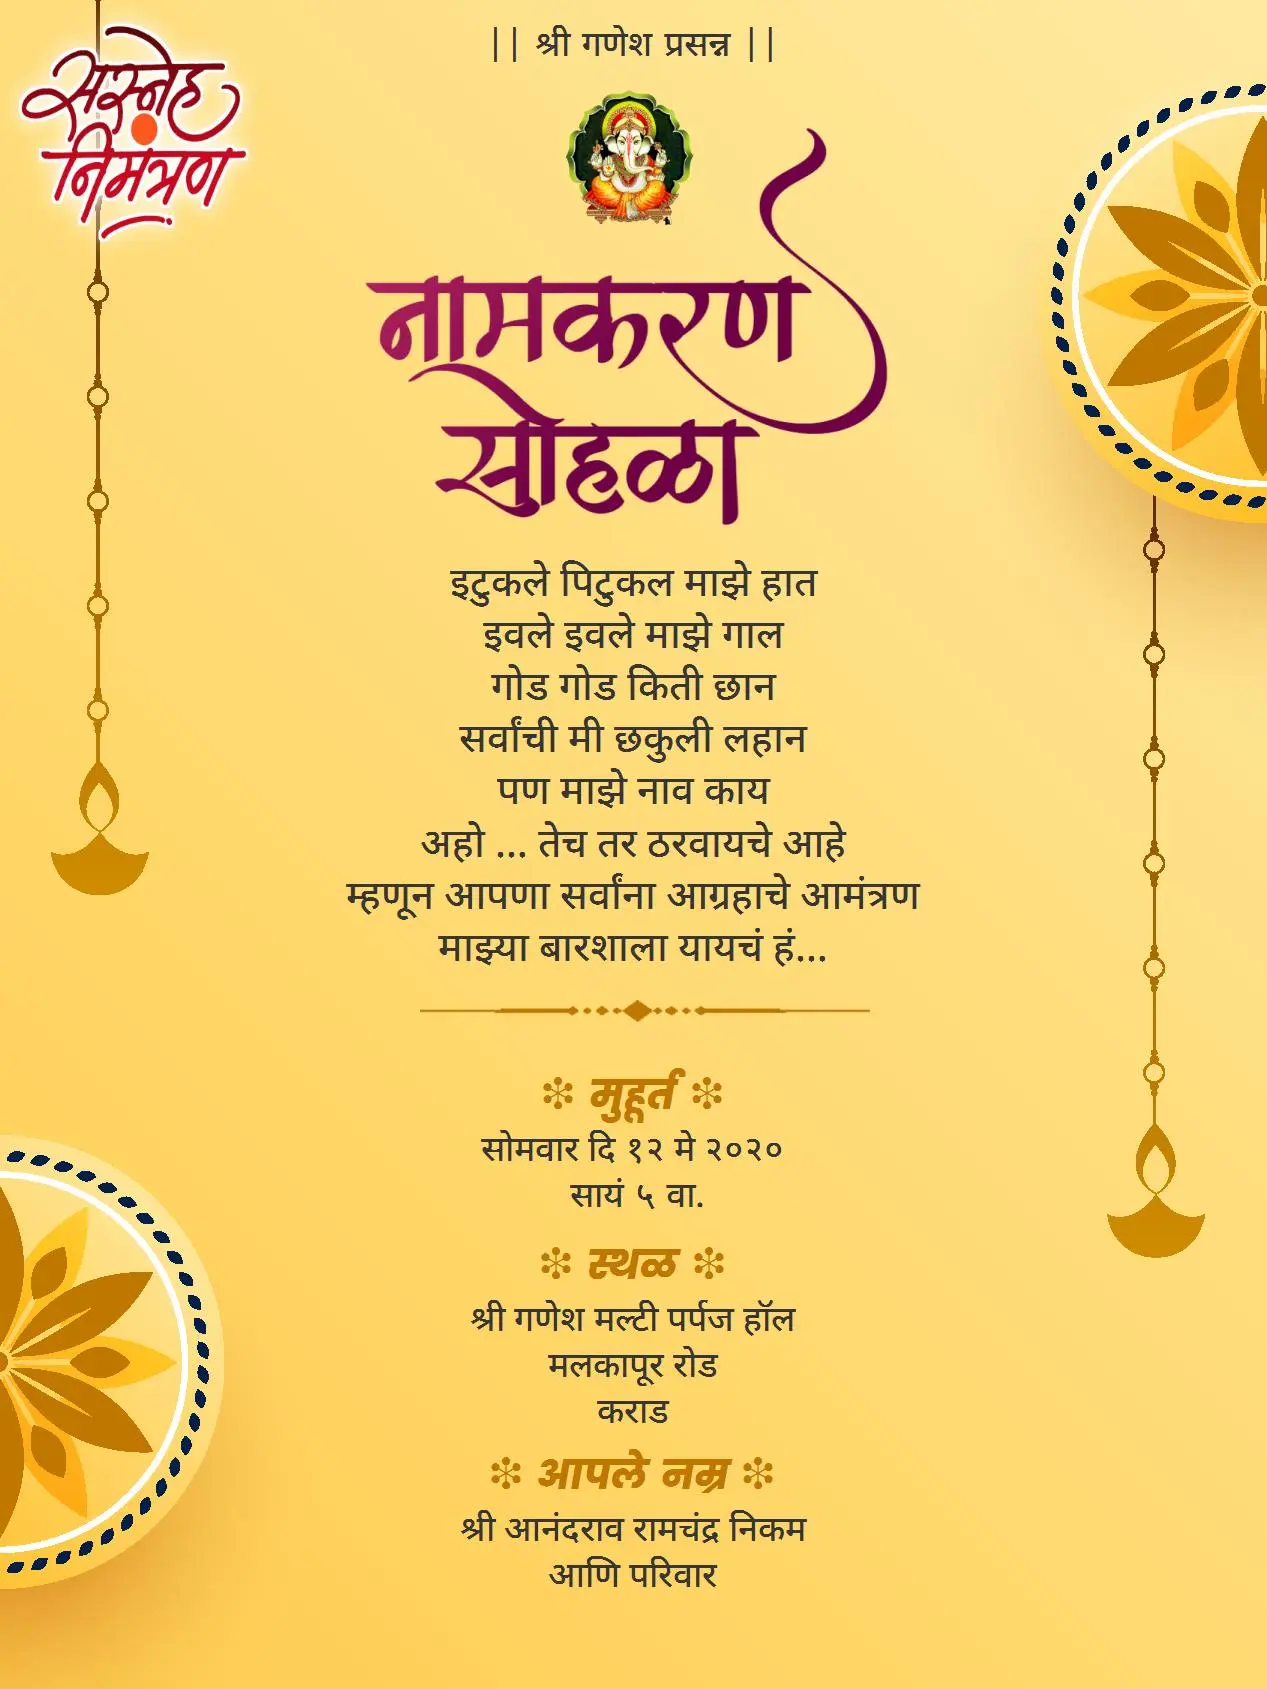 namkaran sohala invitation card in marathi